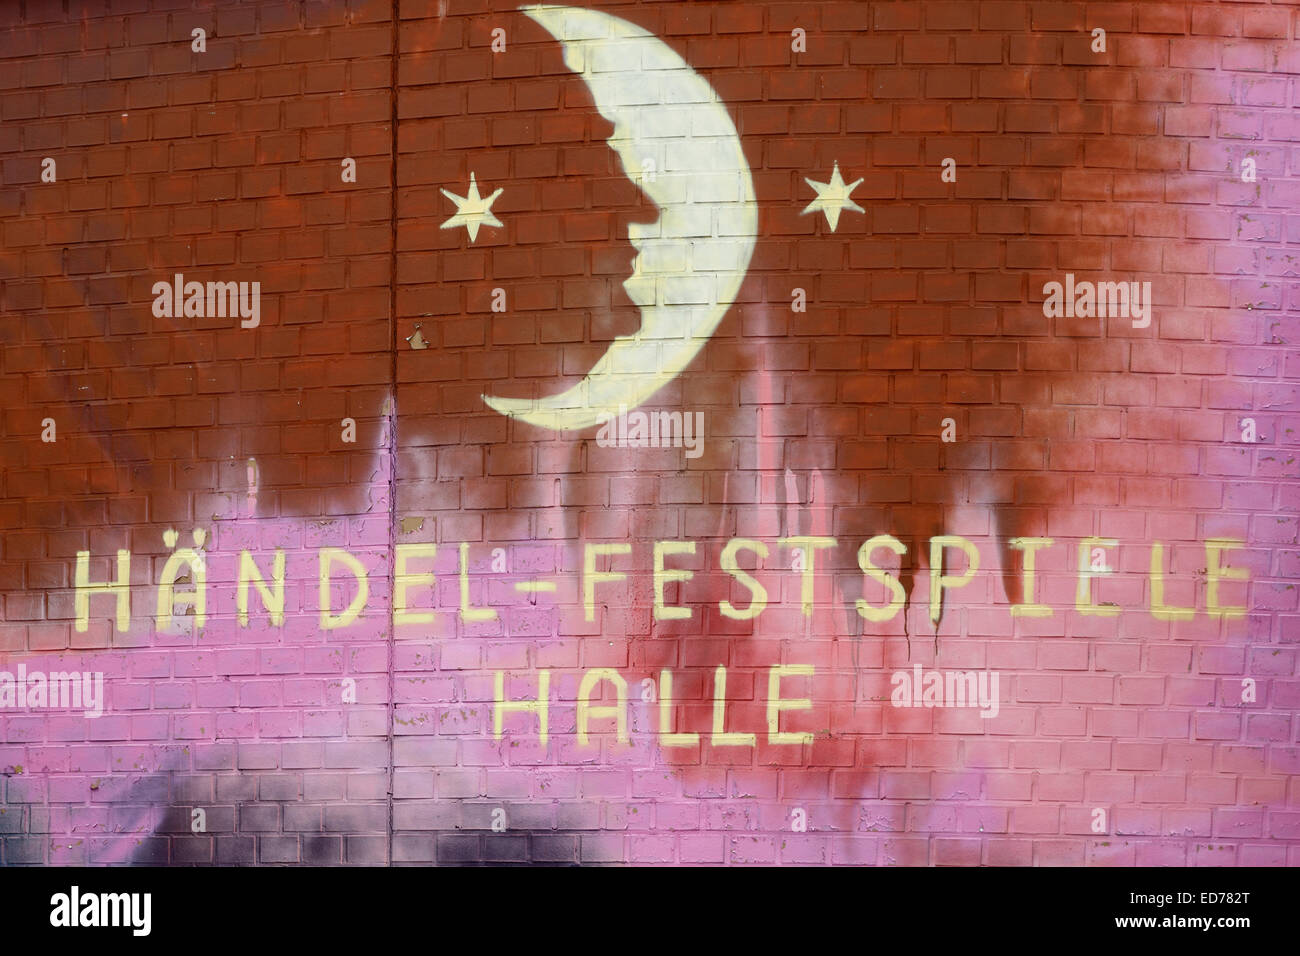 Händel-Festspiele Halle (Saale) - Graffiti Banque D'Images